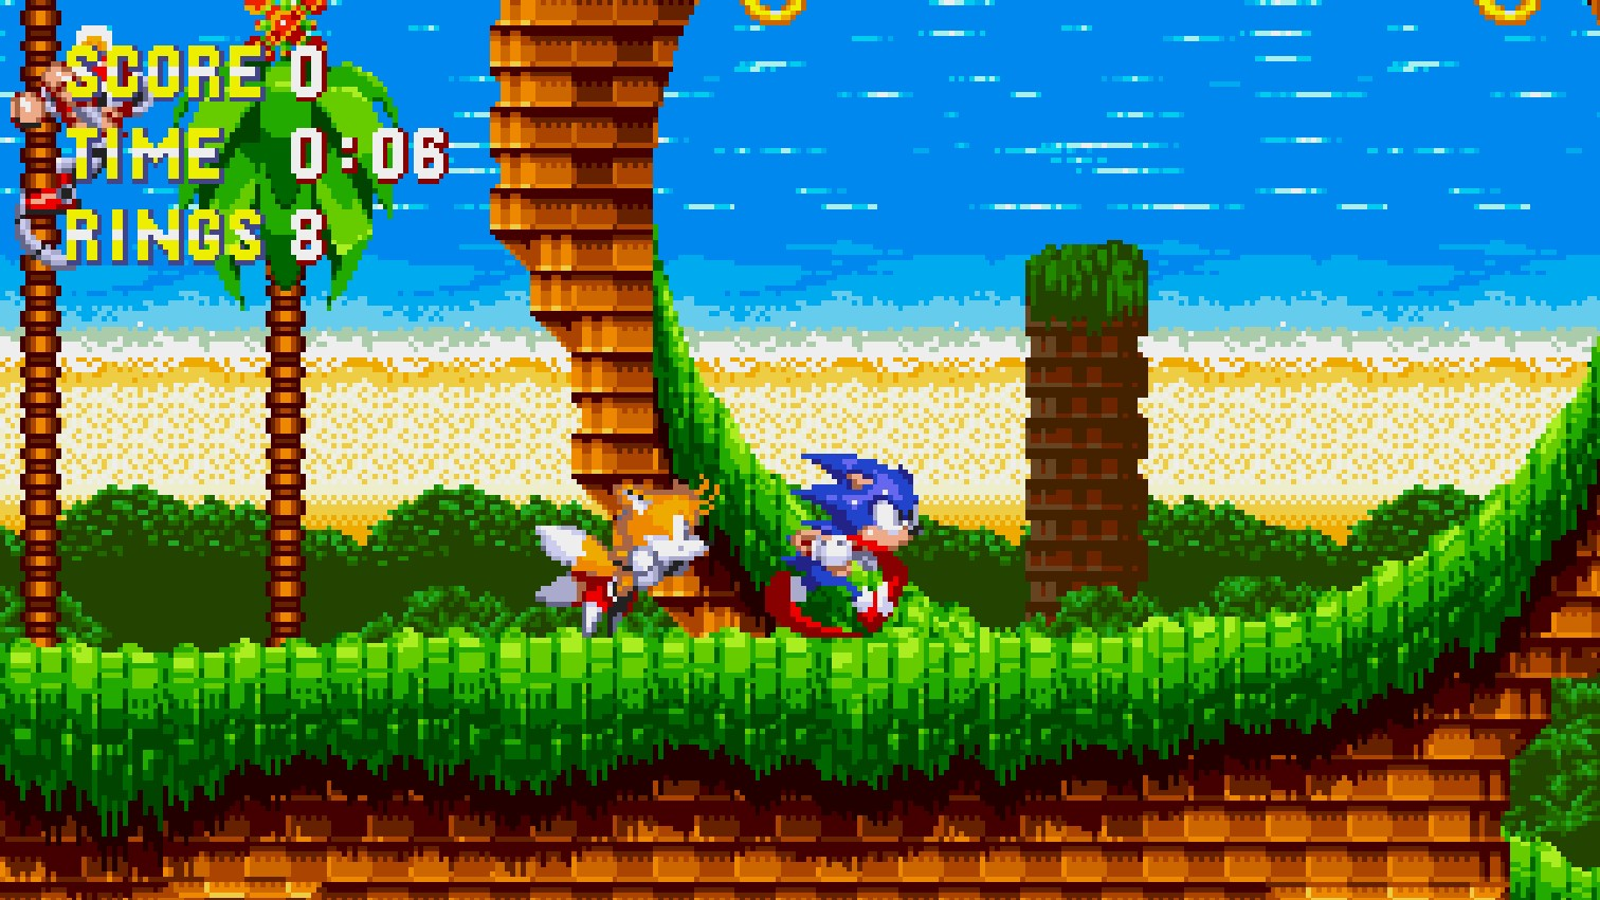 Sonic Adventure 2, Let's Play, 1080p